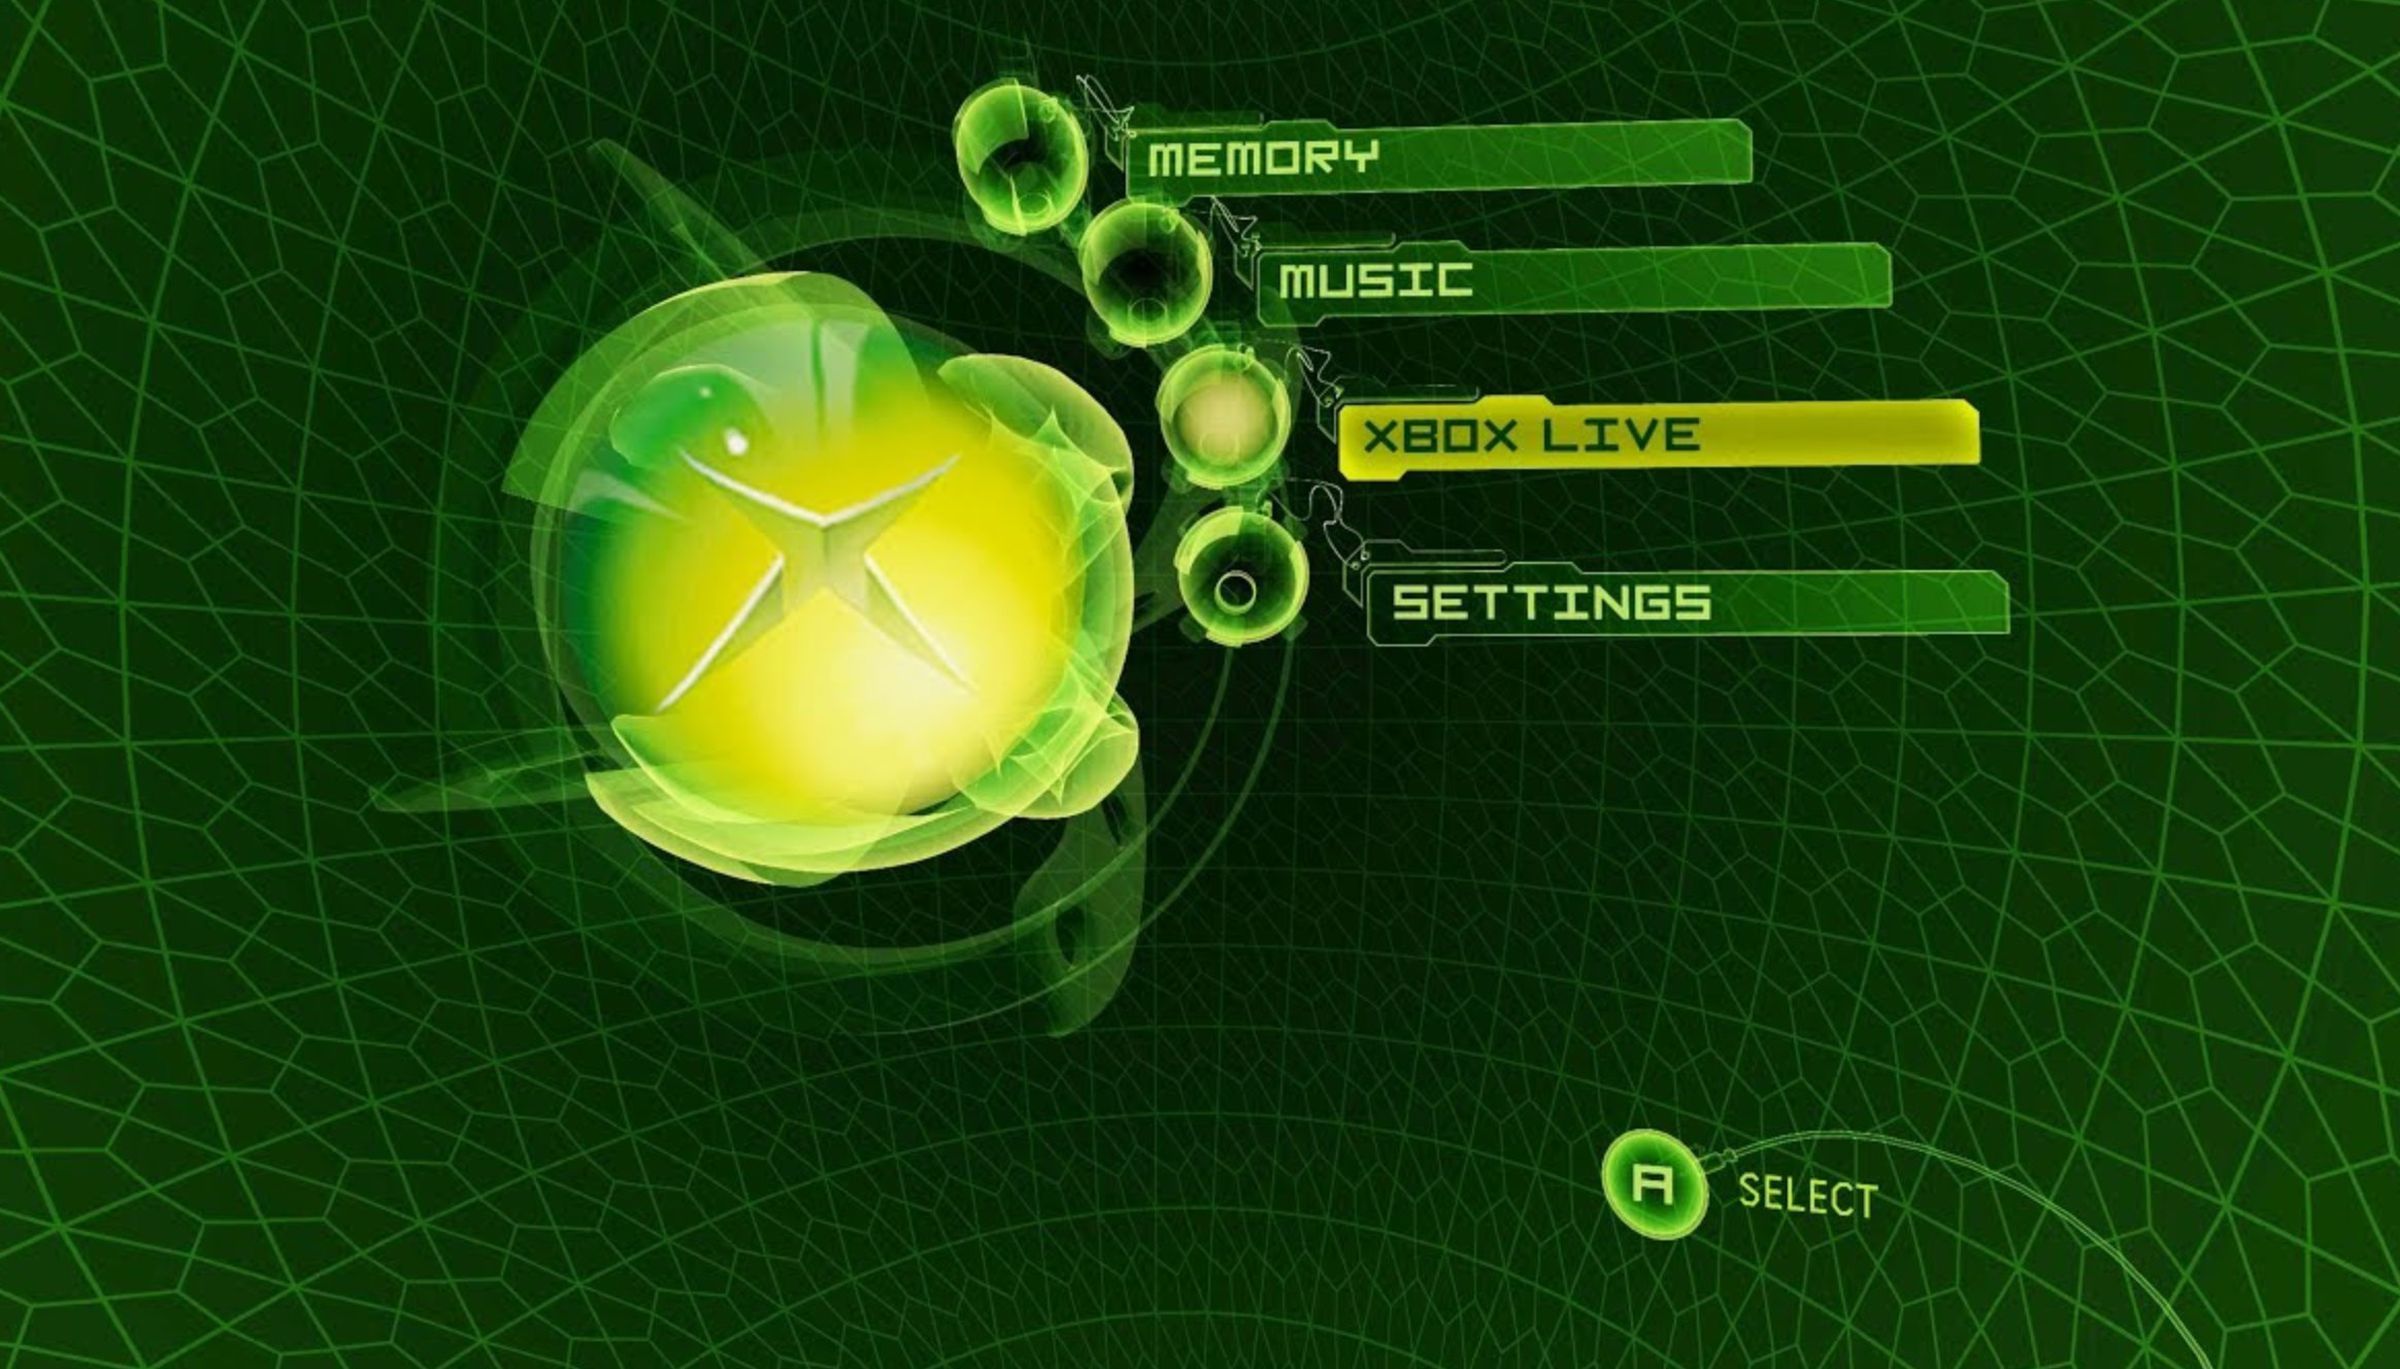 Original Xbox Dashboard.